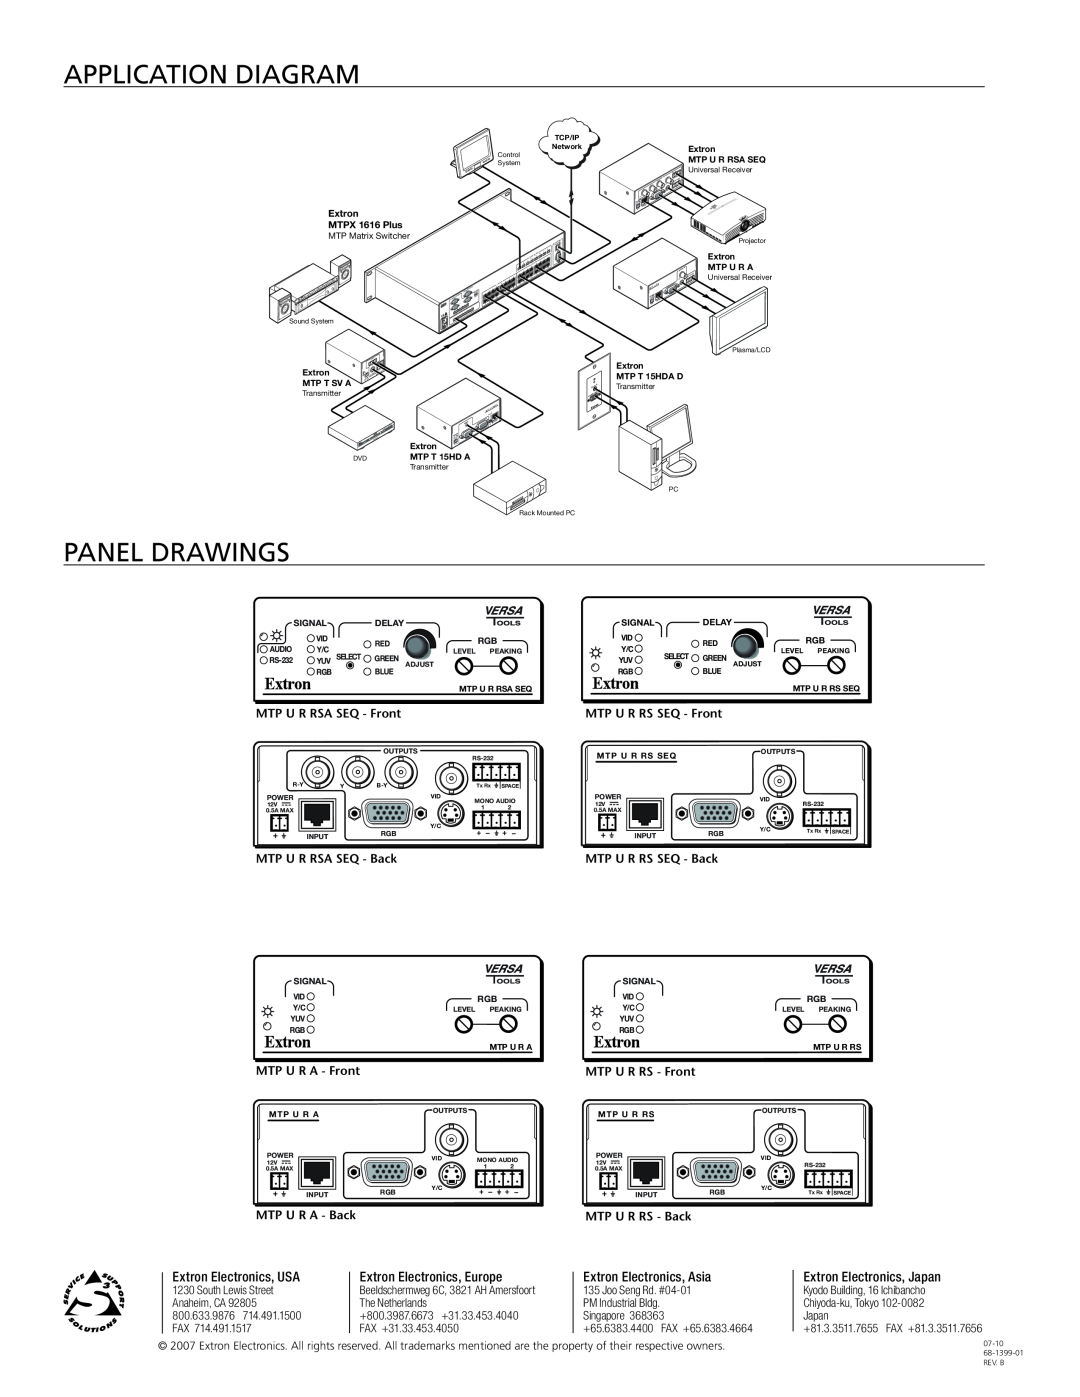 Extron electronic MTP U Series Application Diagram, Panel drawings, Extron Electronics, USA, Extron Electronics, Europe 